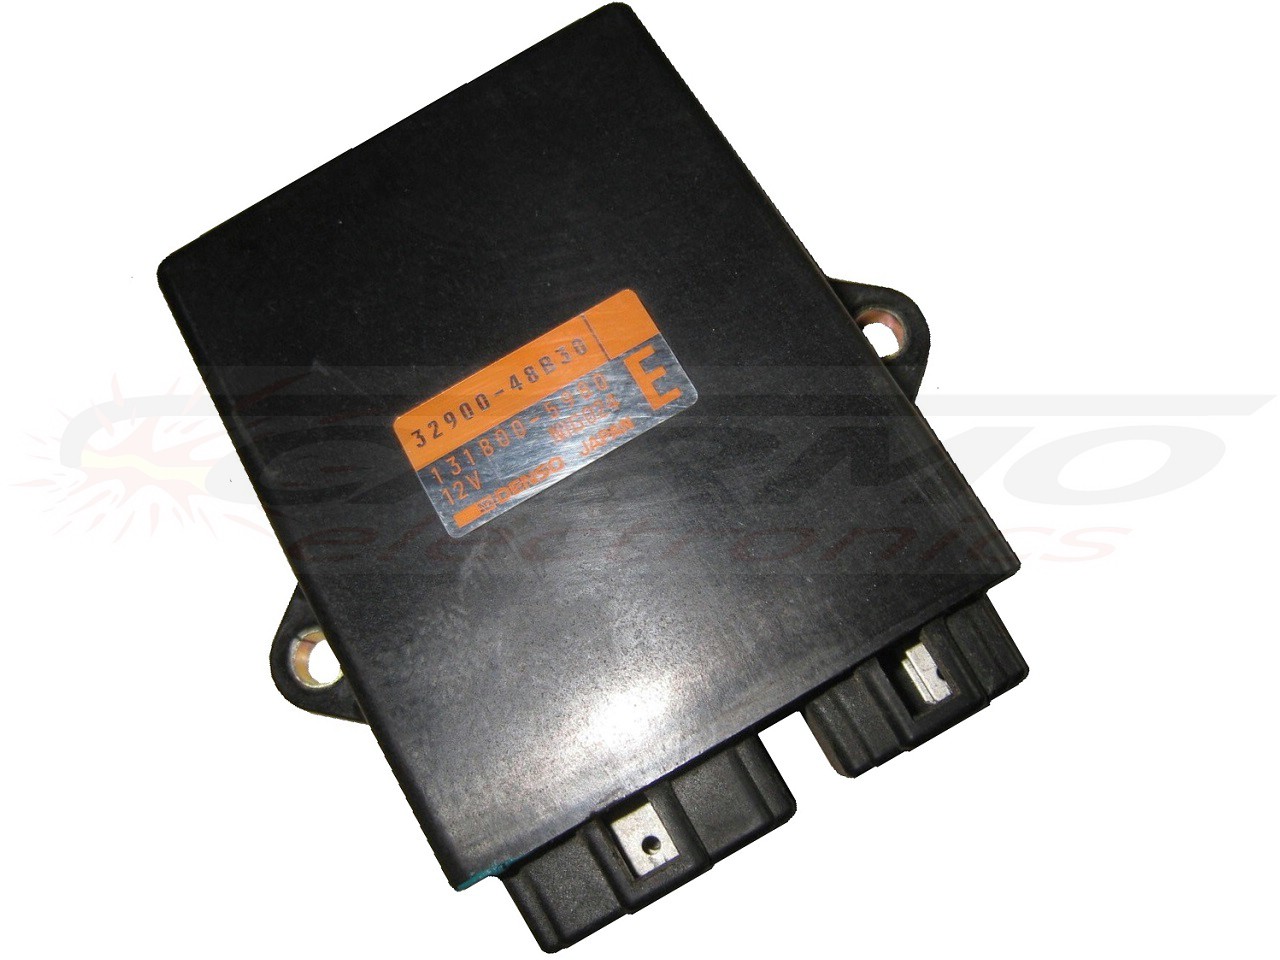 GSX1100 Katana TCI CDI dispositif de commande boîte noire (32900-48B30, 131800-5980)